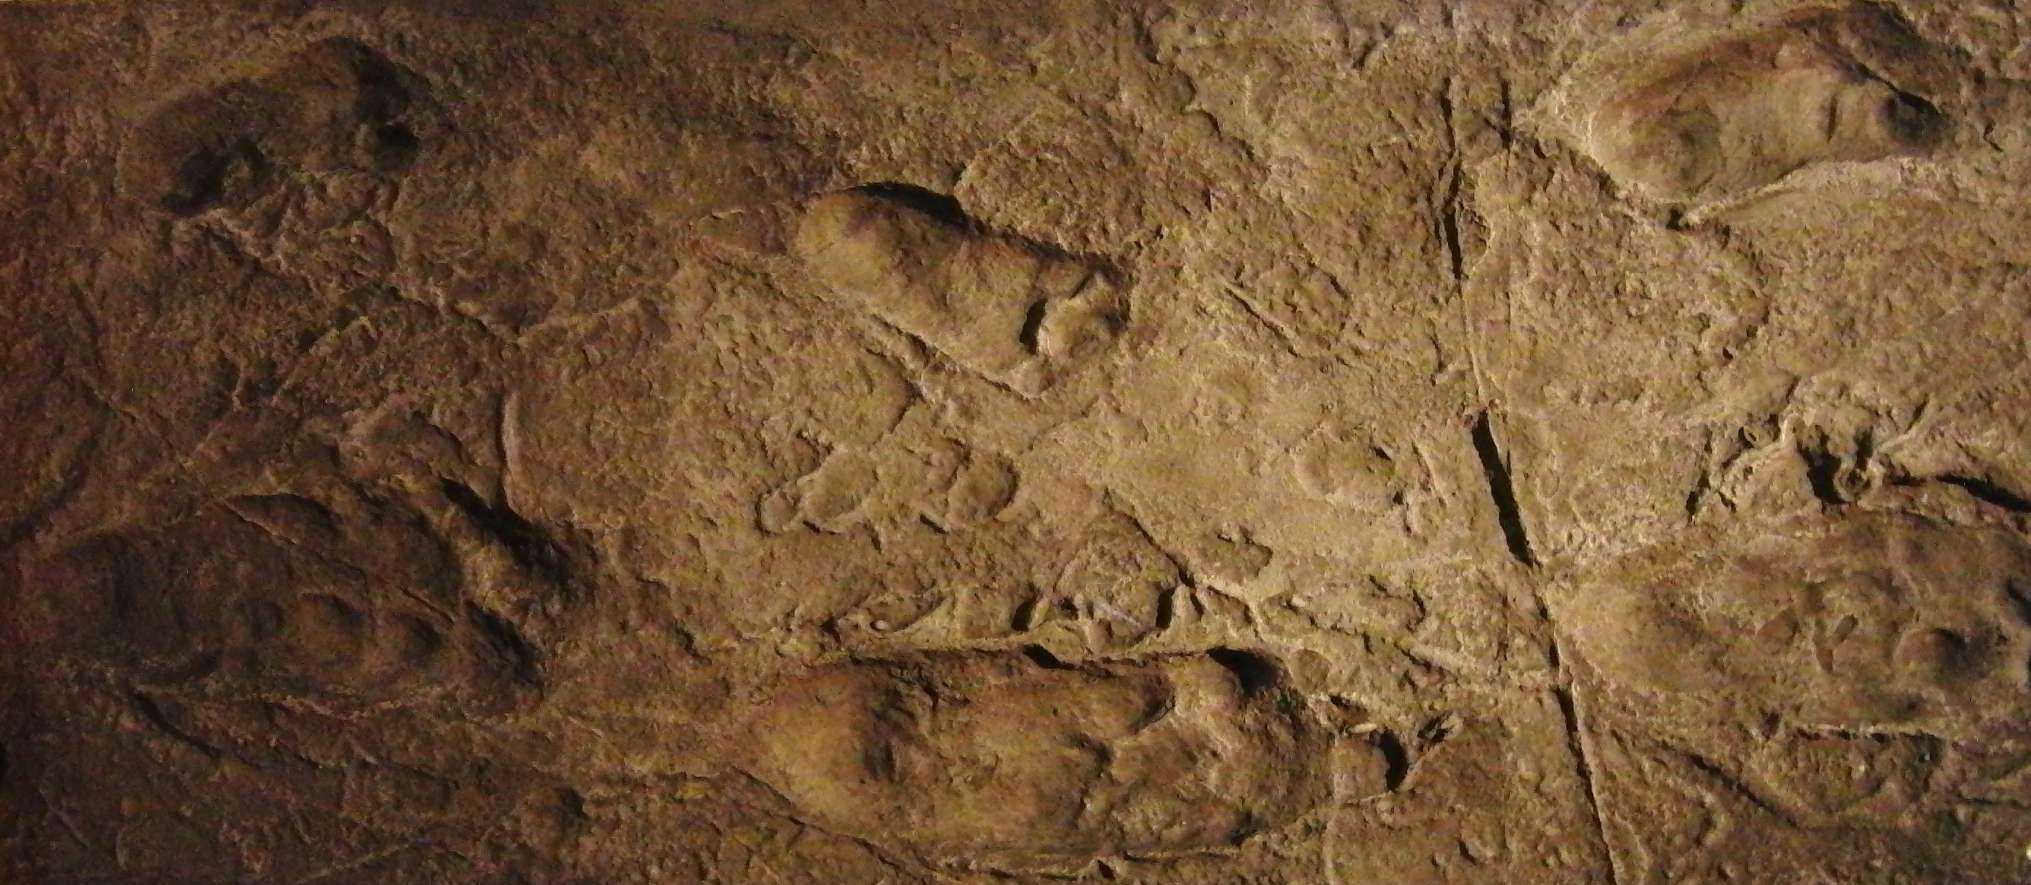 Réplica das pegadas de Laetoli